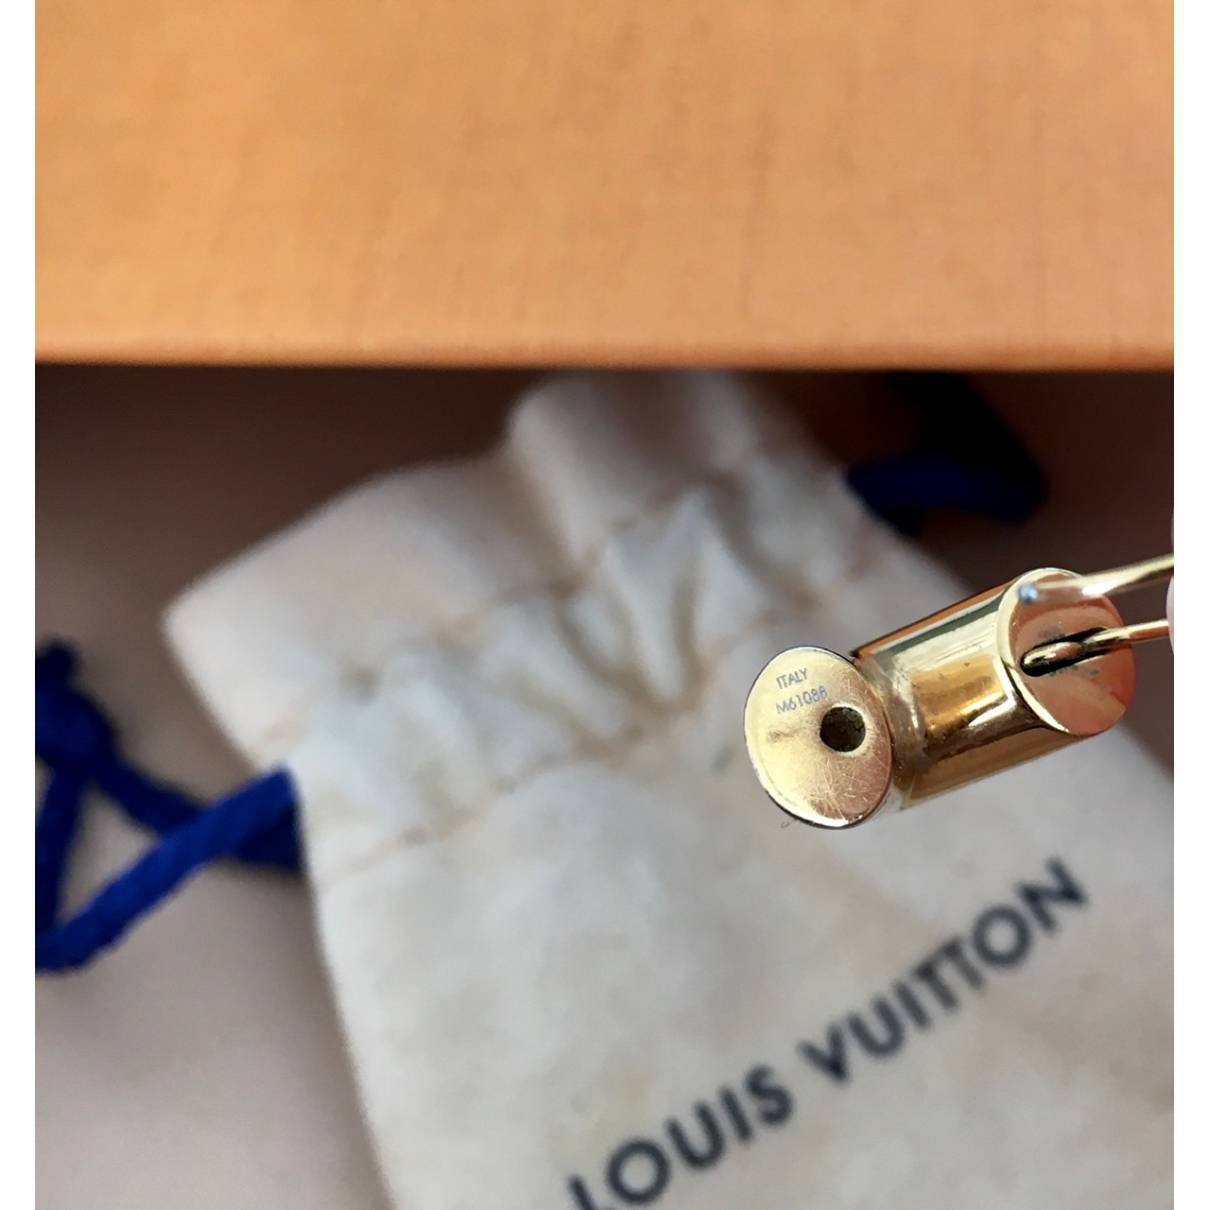 Louis Vuitton V Essential v hoops (M61088)